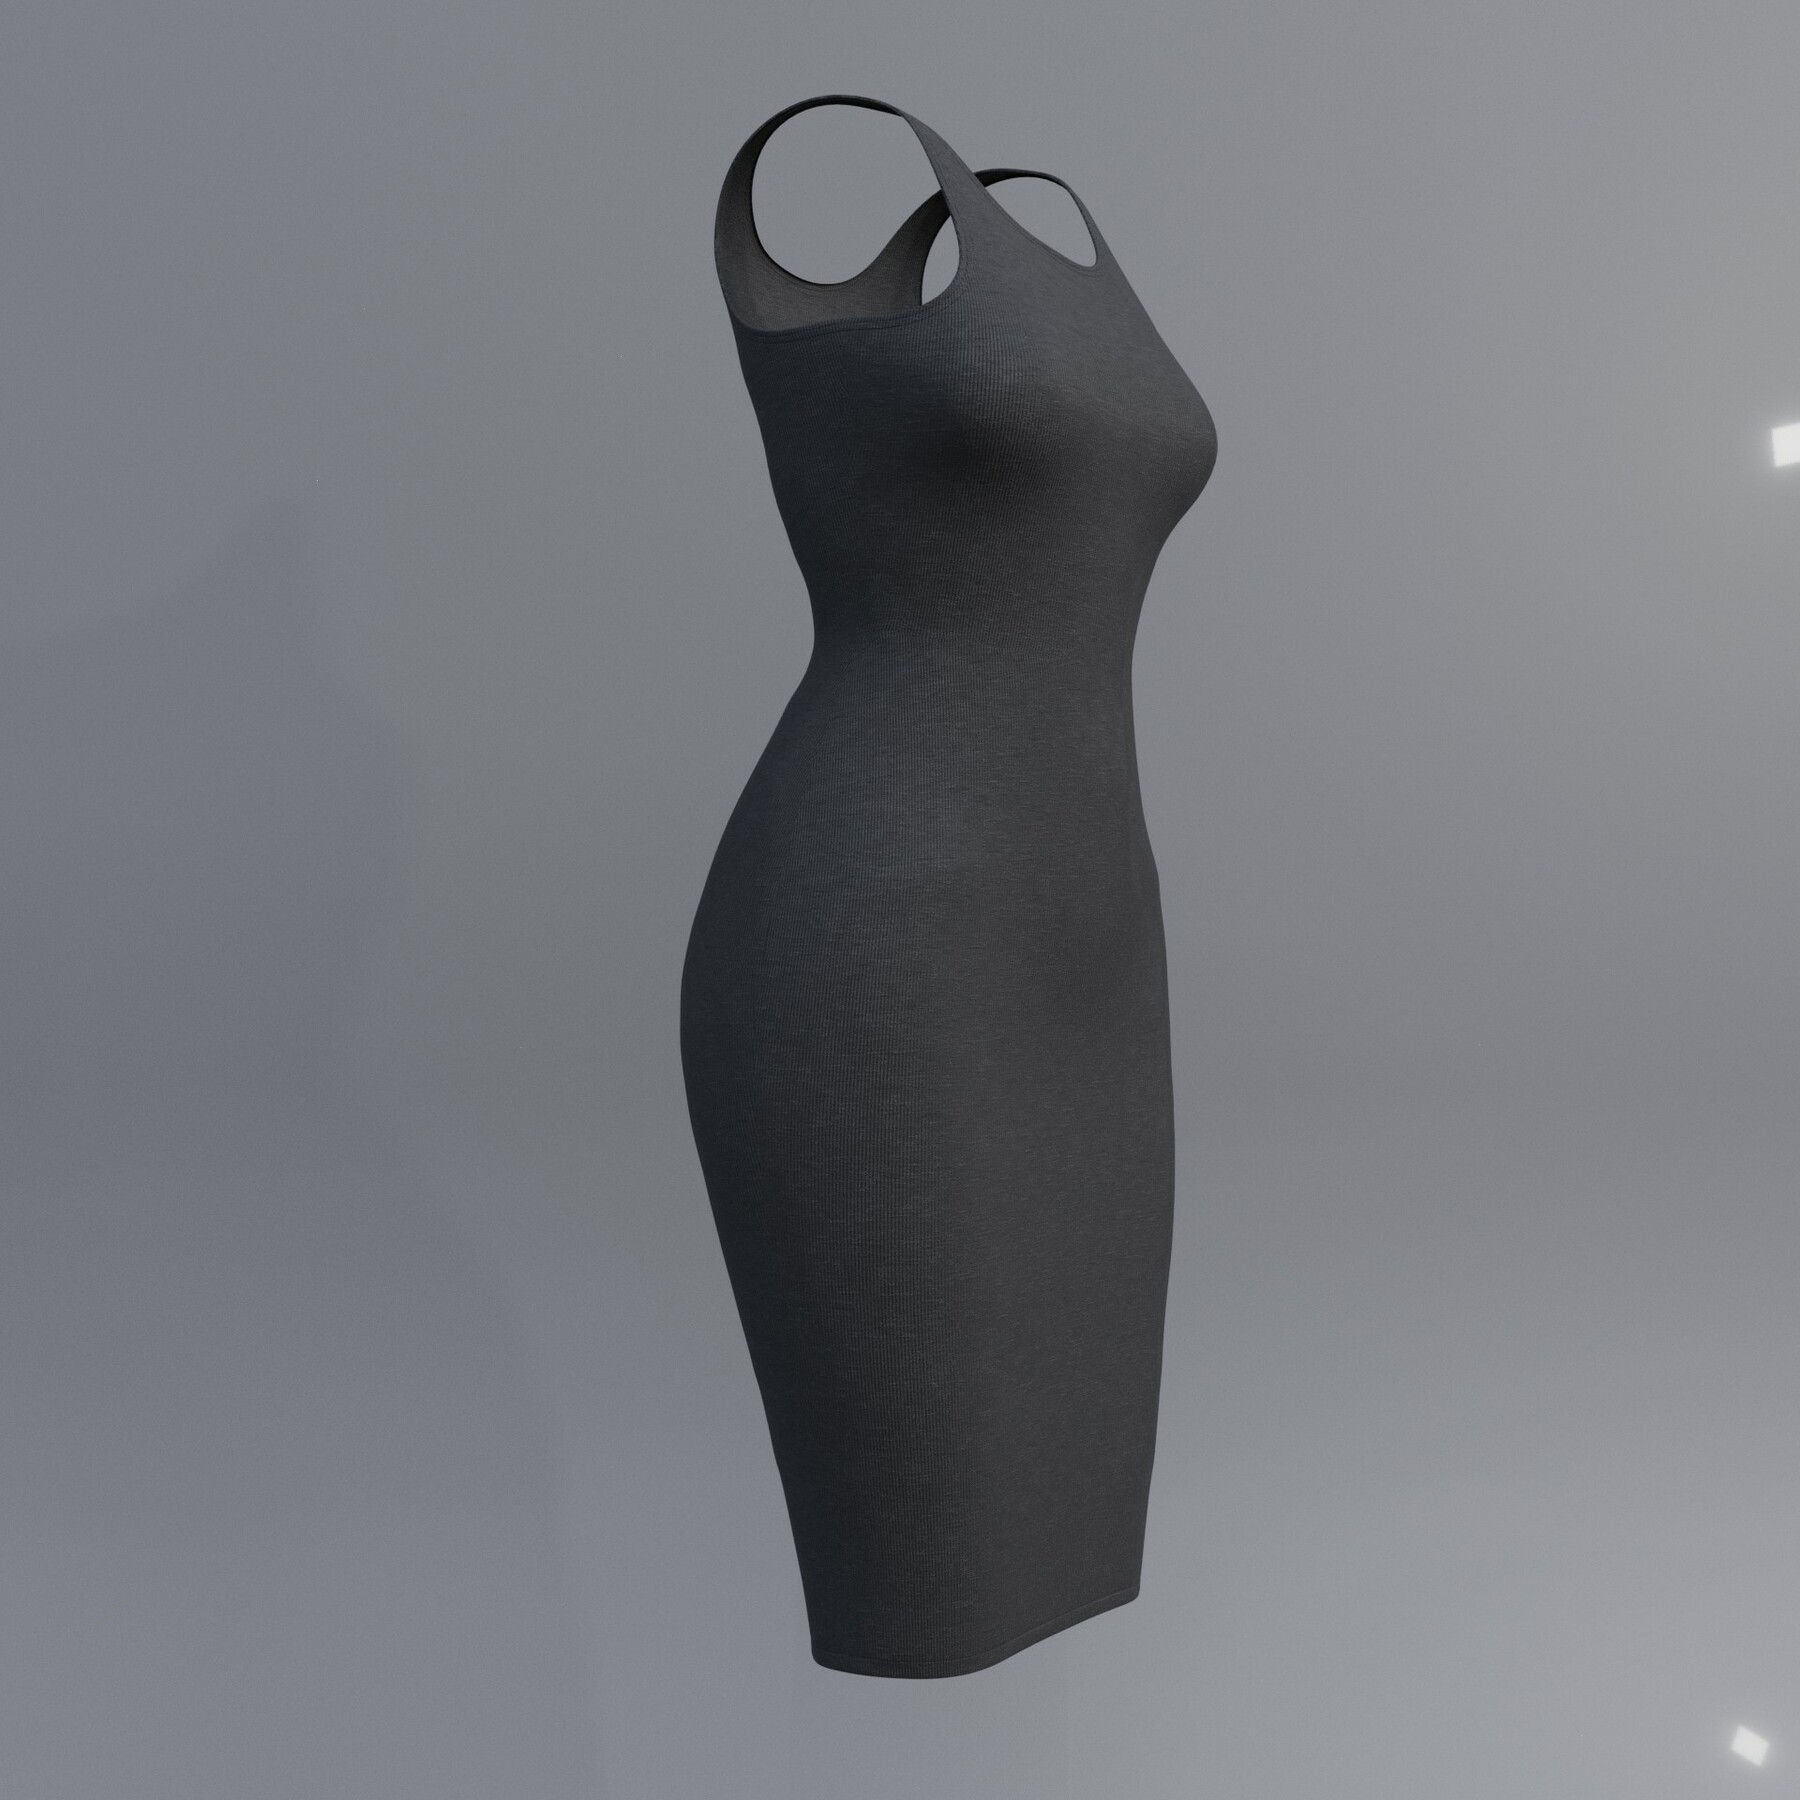 ArtStation - 3D women sexy bodycon tank dress | Game Assets